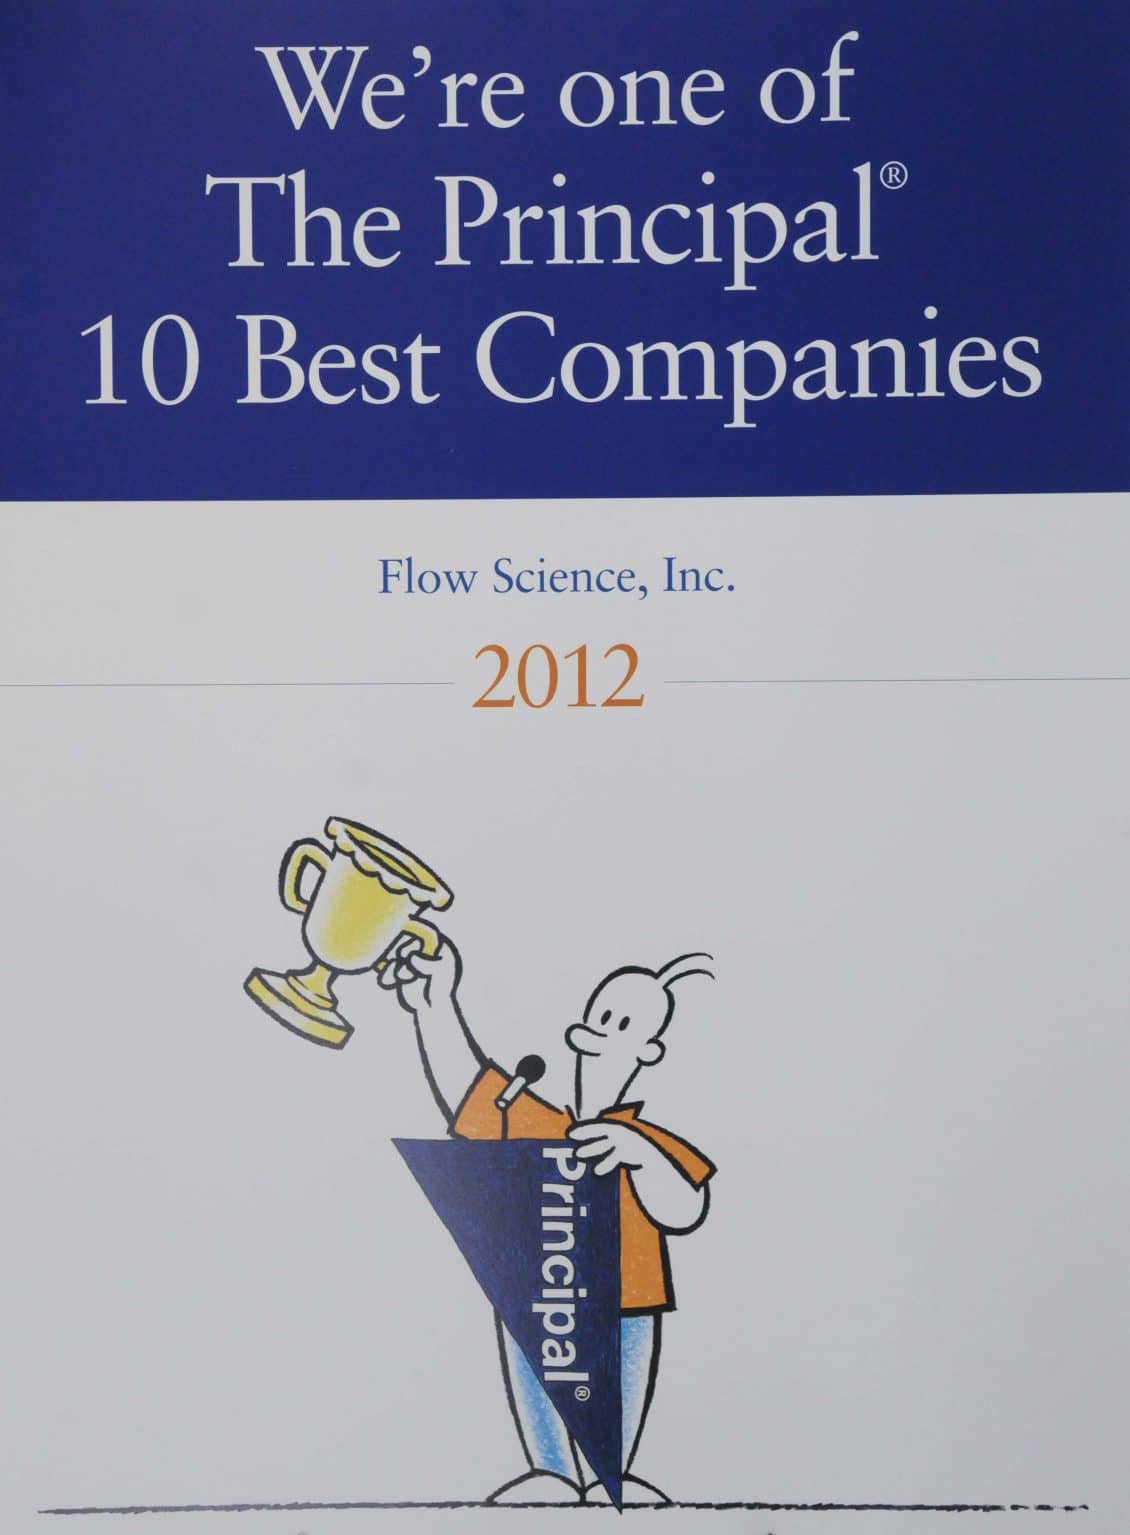 10 Best Companies Award